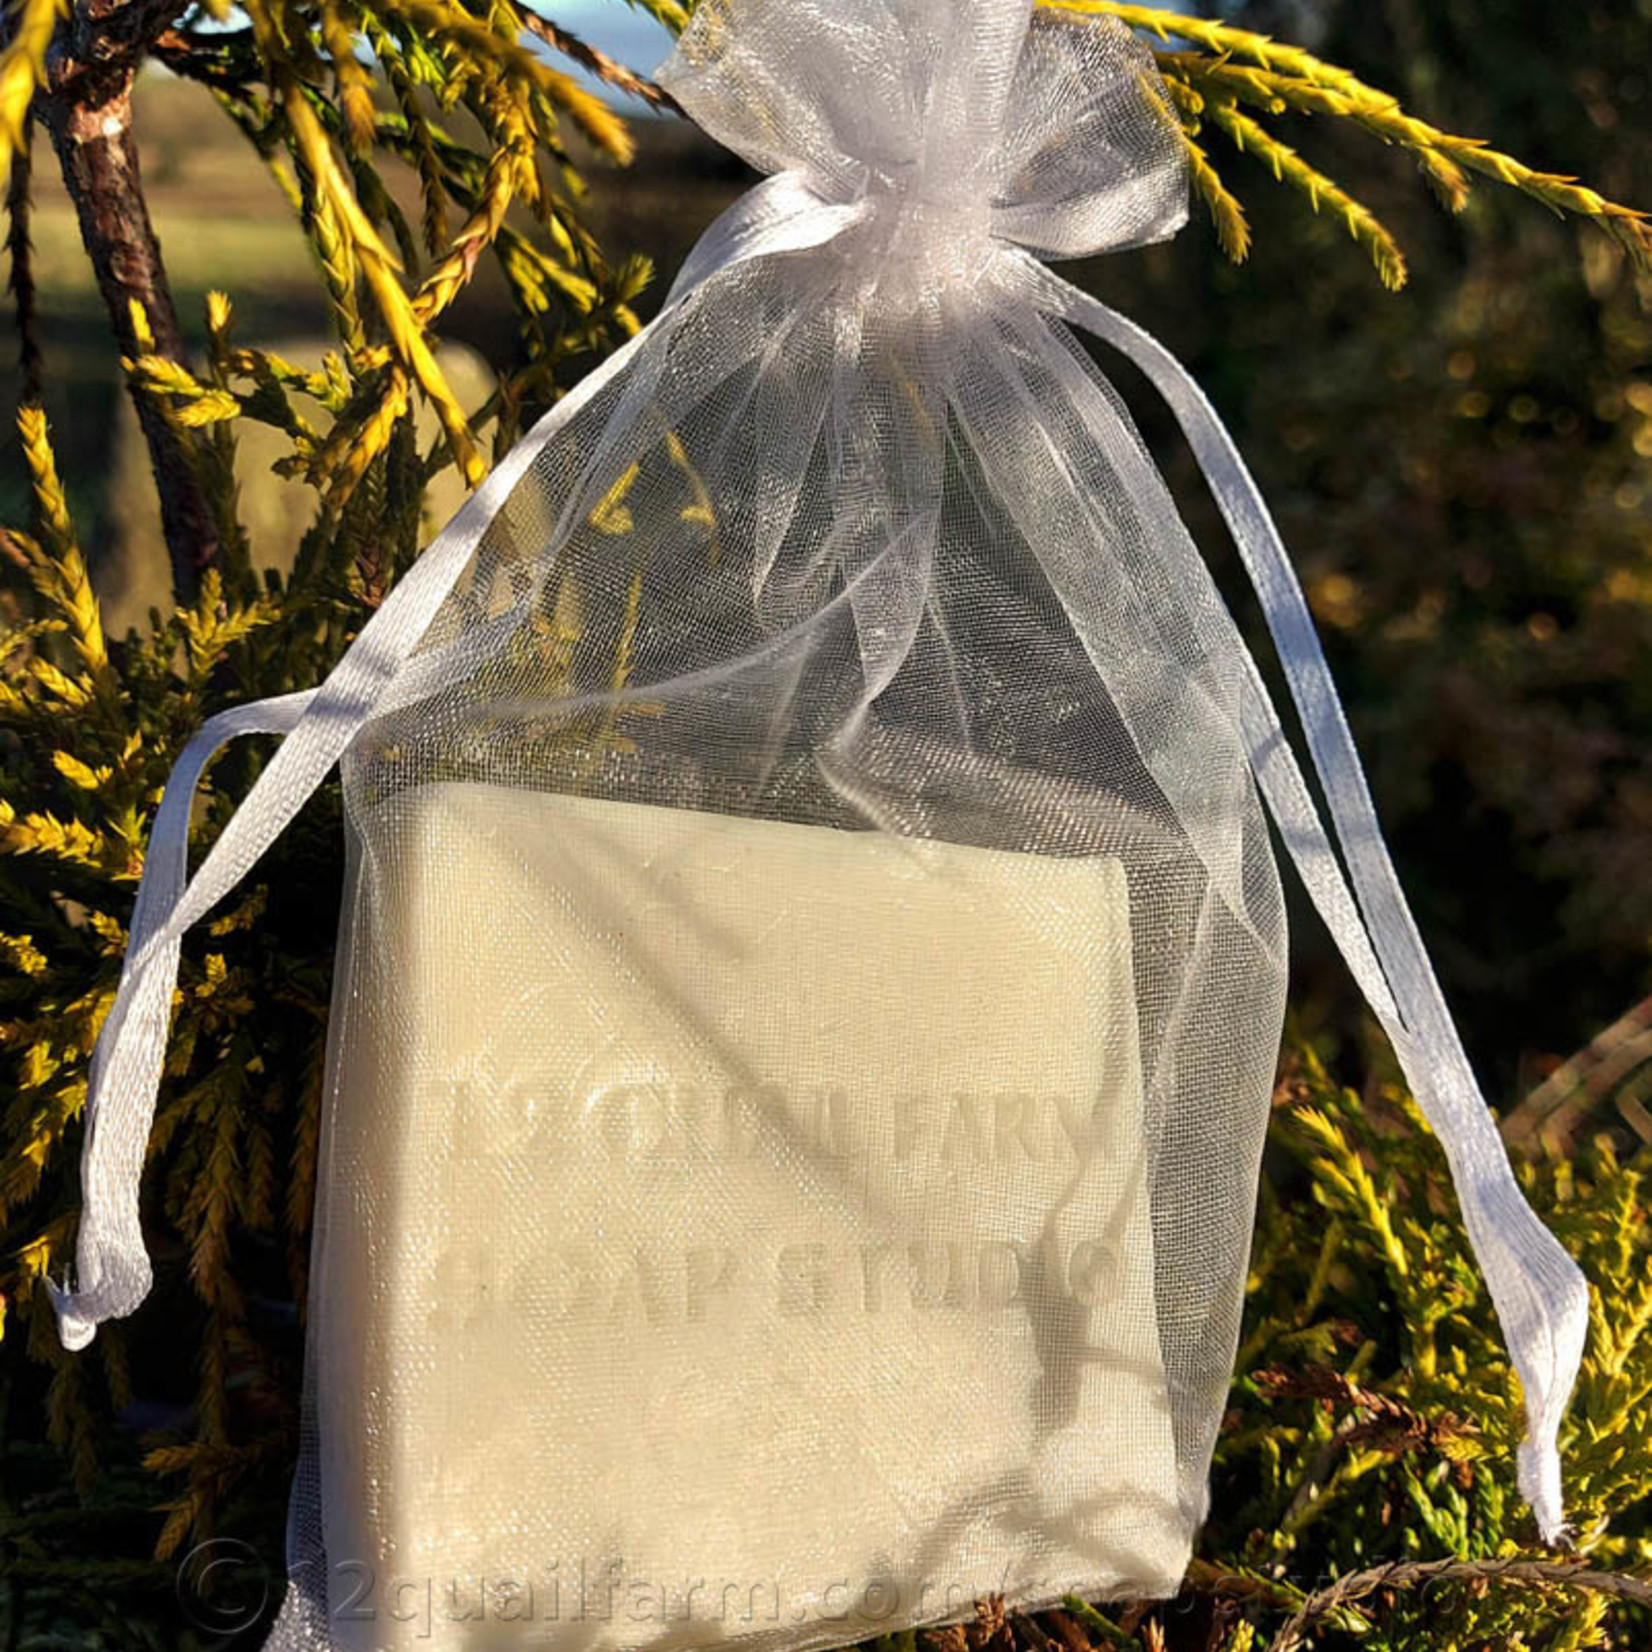 12 Quail Farm Soap Studio Fragrance Free Donkey's Milk Soap